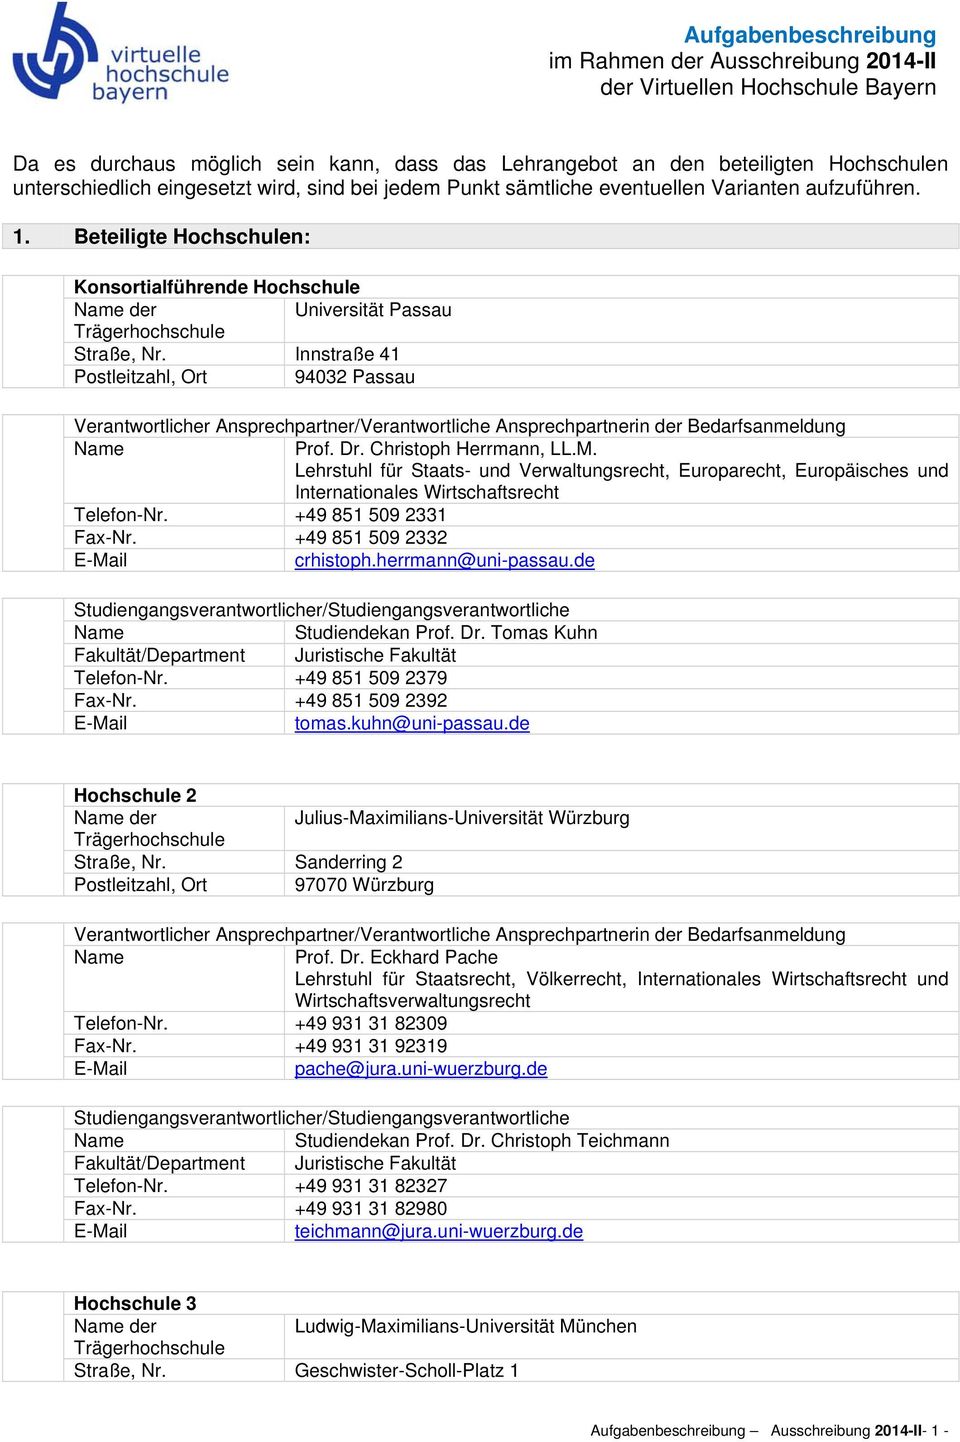 Innstraße 41 Postleitzahl, Ort 94032 Passau Verantwortlicher Ansprechpartner/Verantwortliche Ansprechpartnerin der Bedarfsanmeldung Prof. Dr. Christoph Herrmann, LL.M.